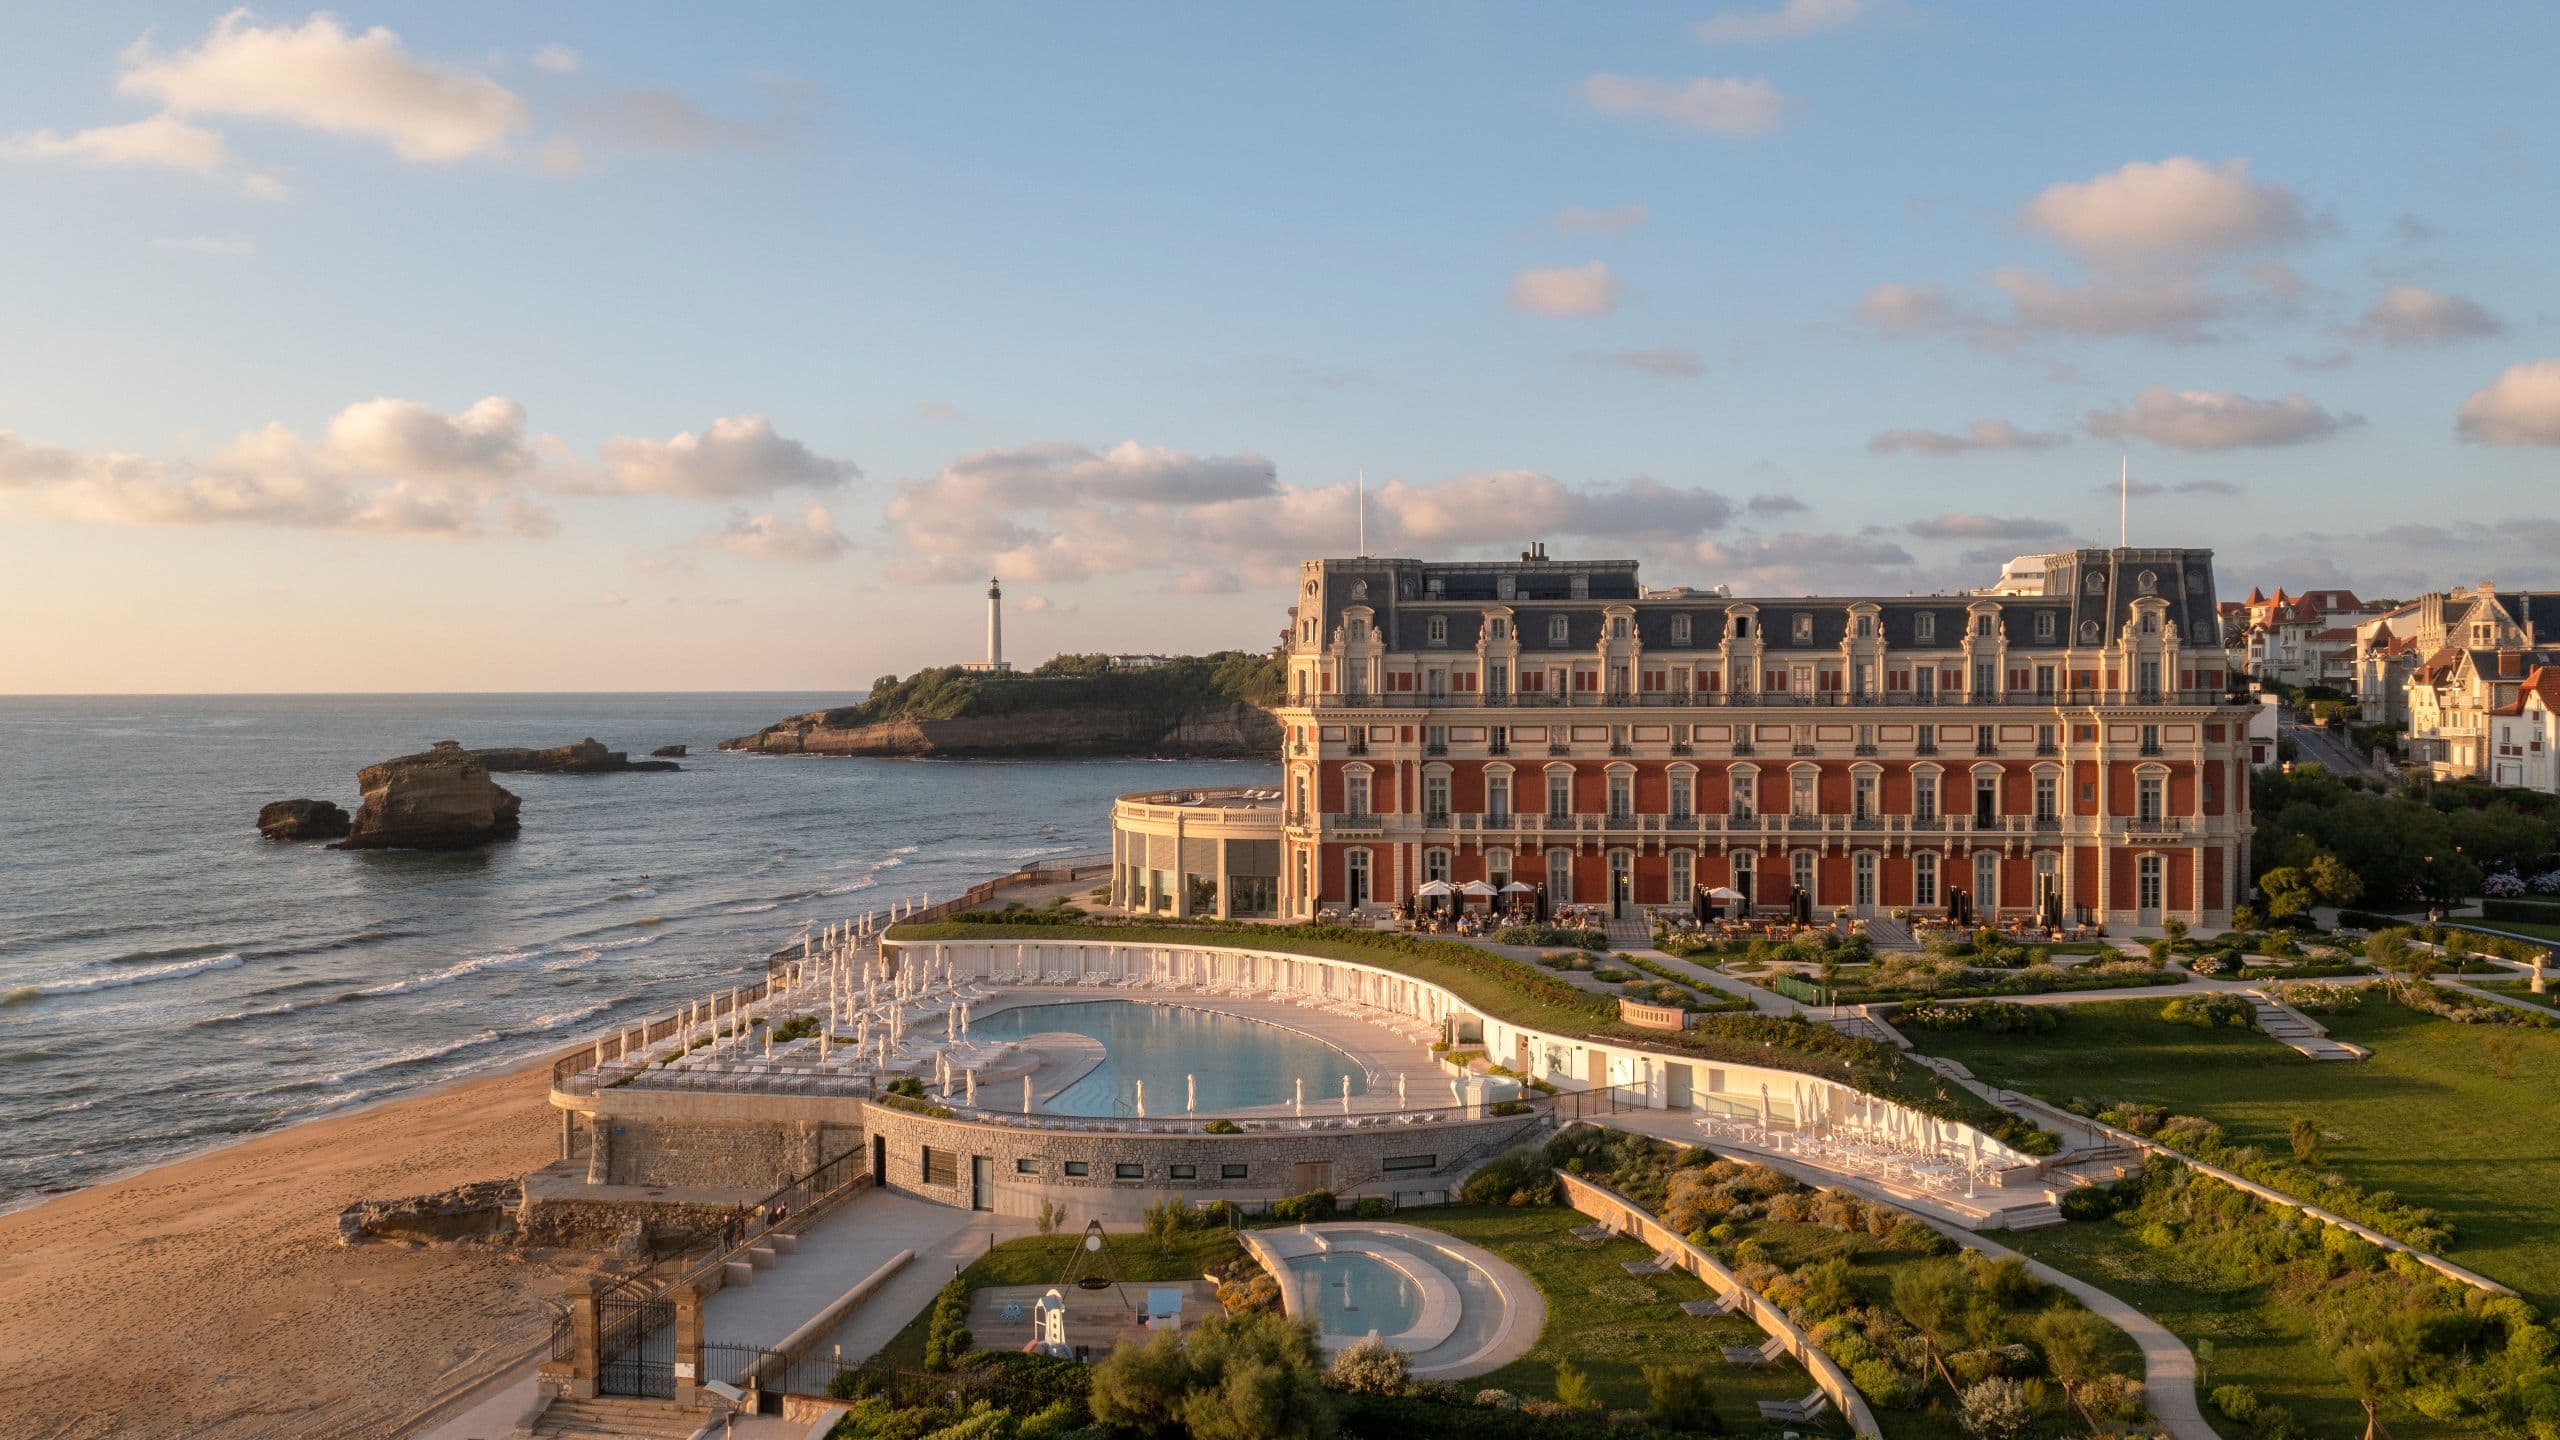 Luxury 5* Hotel overlooking the Sea in Biarritz | Hôtel du Palais by Hyatt